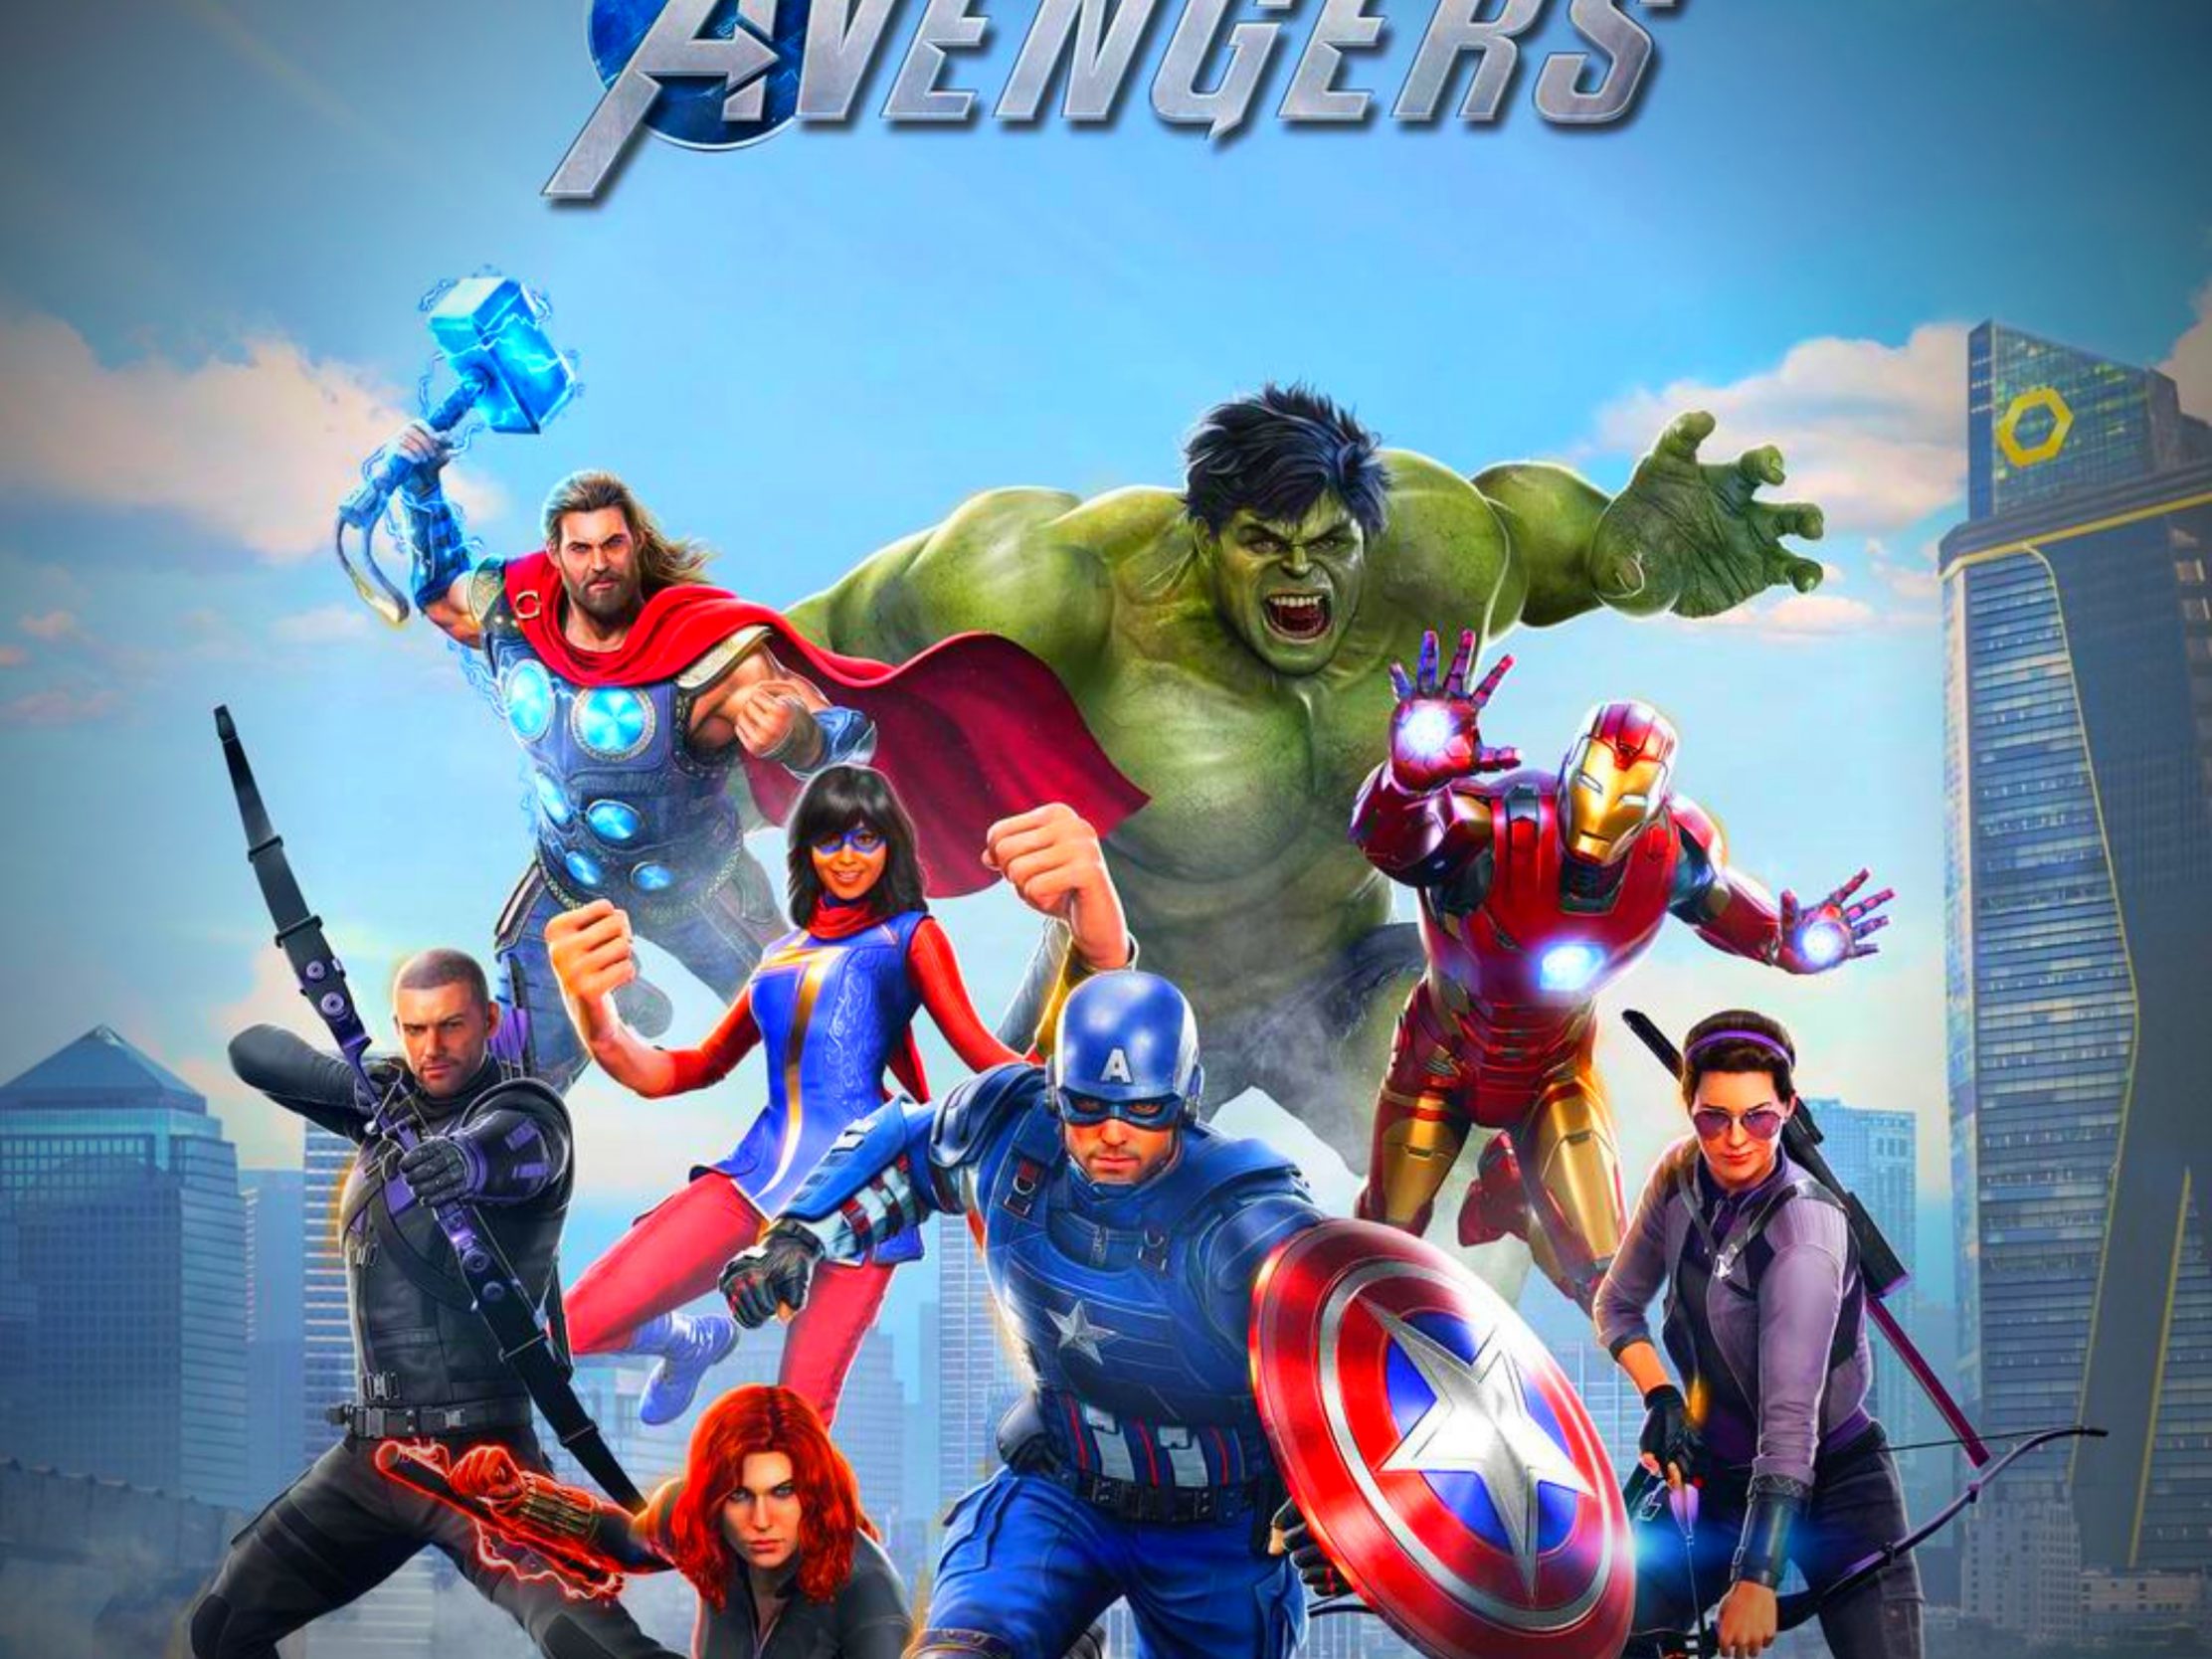 2224x1668 iPad Pro wallpapers Marvel Avengers iPad Wallpaper 2224x1668 pixels resolution